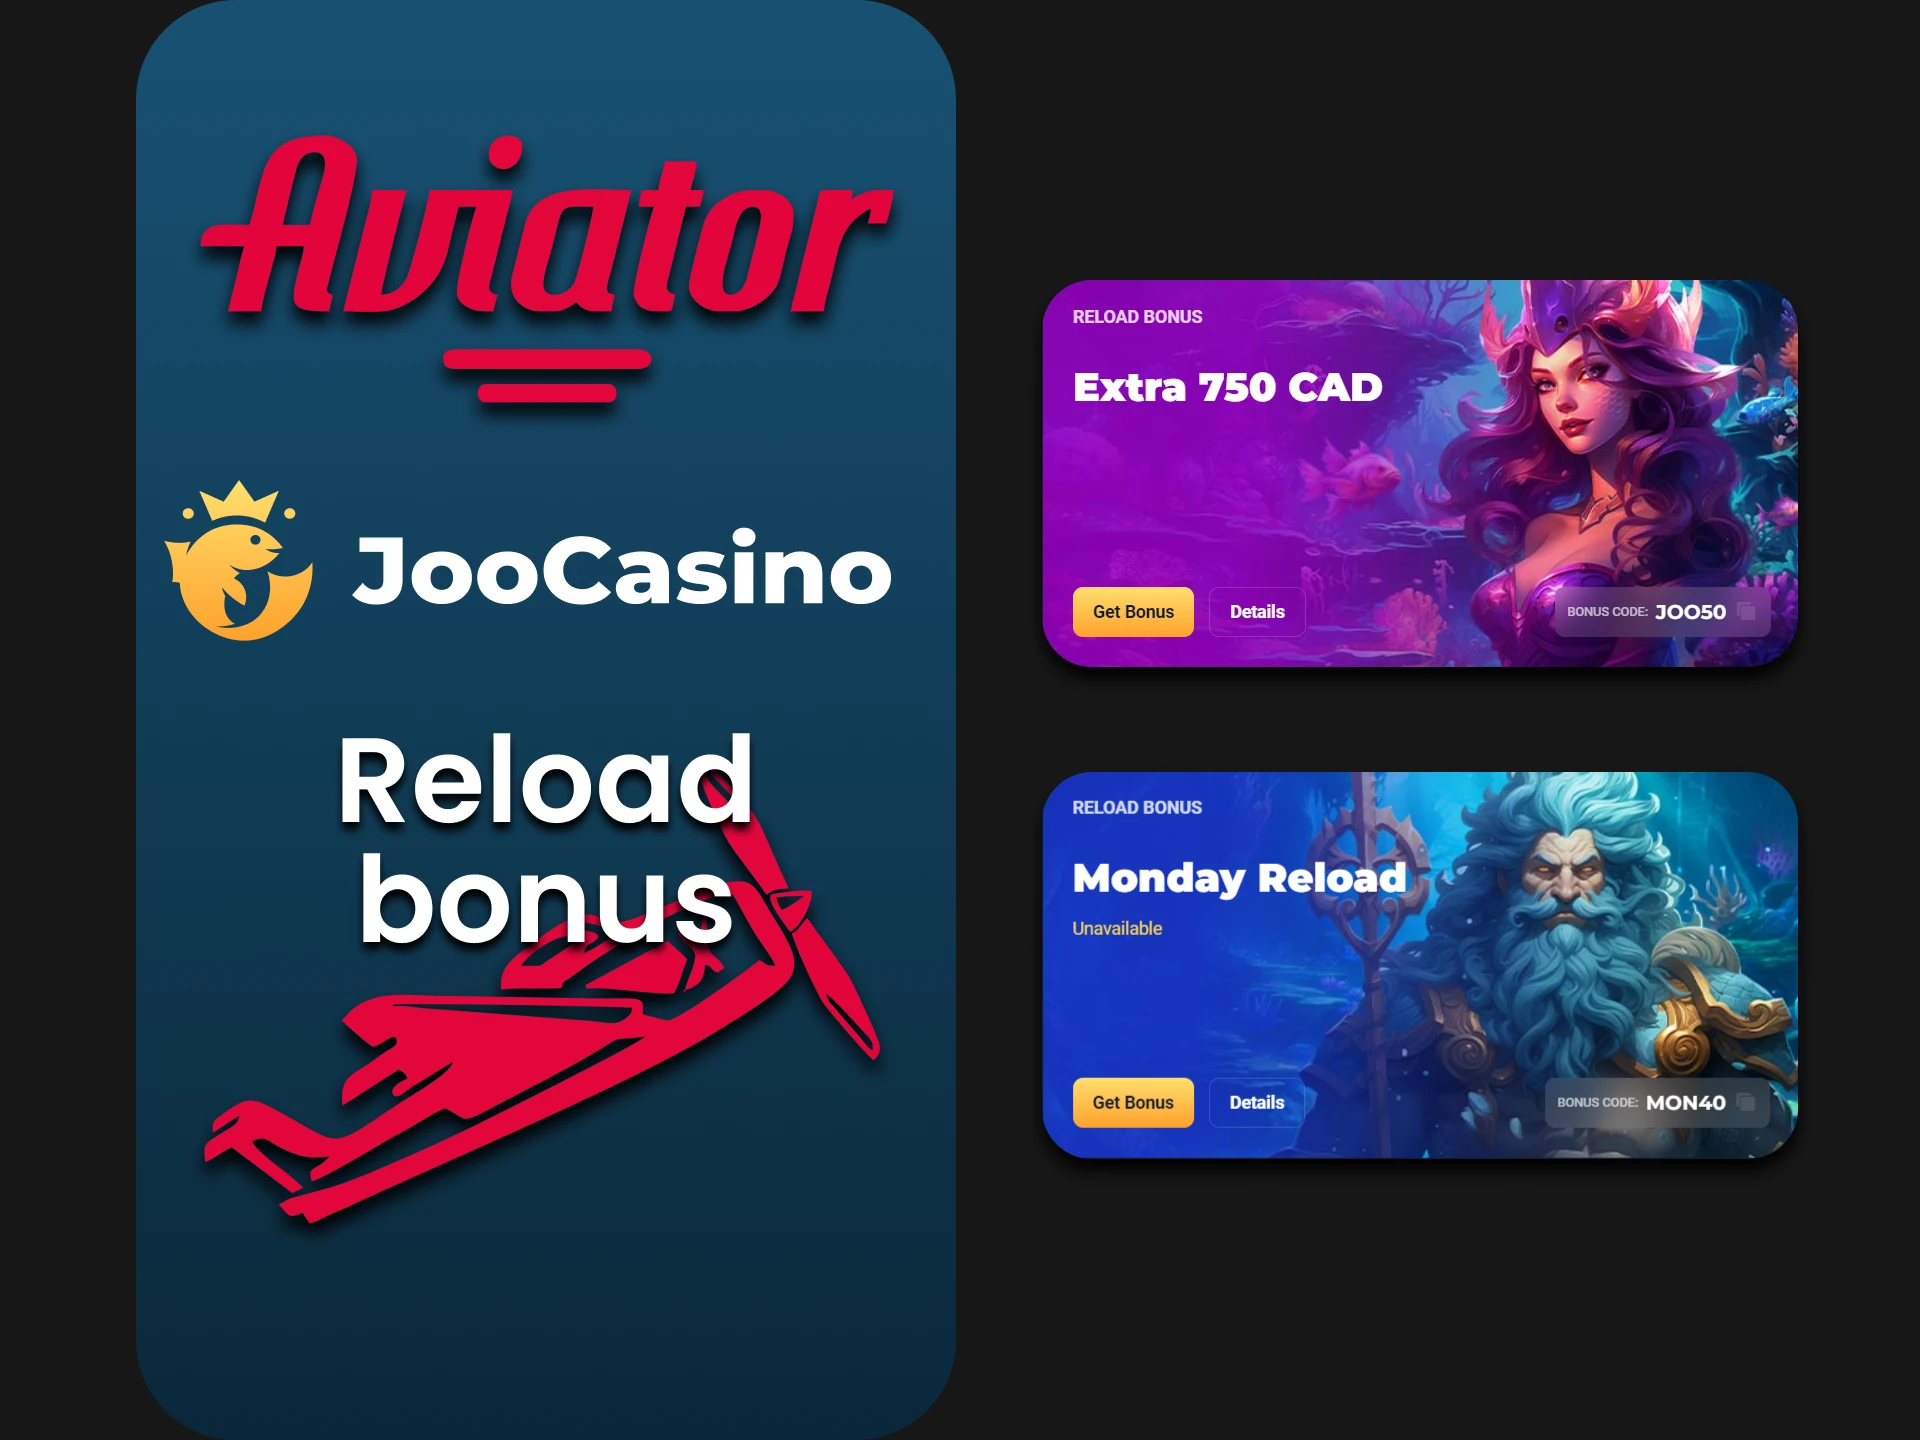 Joo Casino gives a Reload bonus for the Aviator.